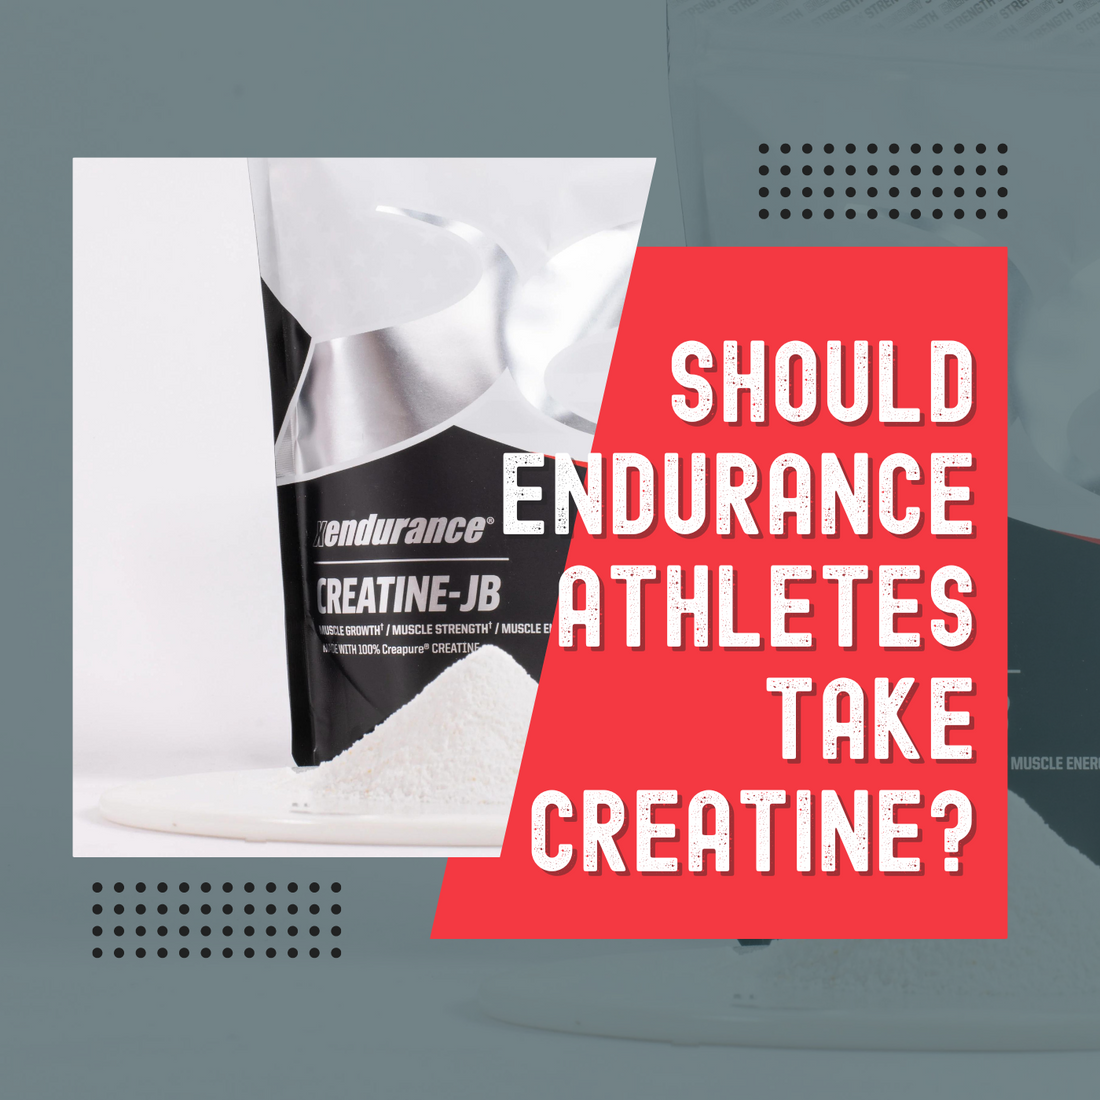 Should Endurance Athletes take Creatine?